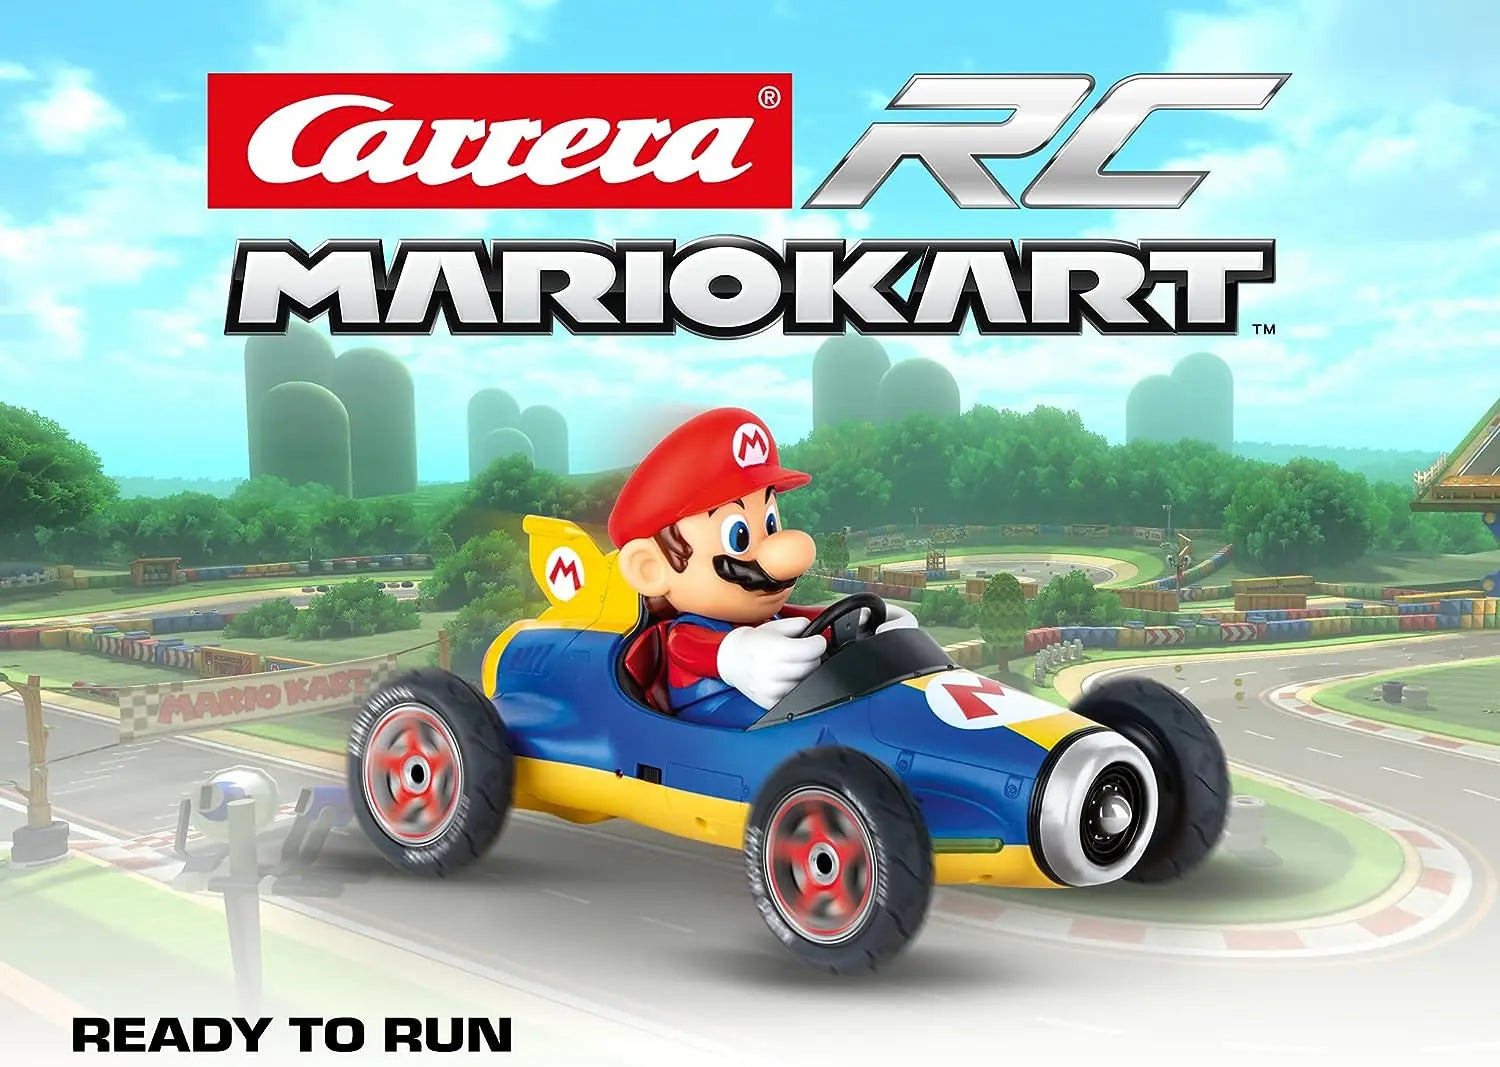 Circuit de voiture Carrera Nintendo Mario Kart ™ 2,4m chez